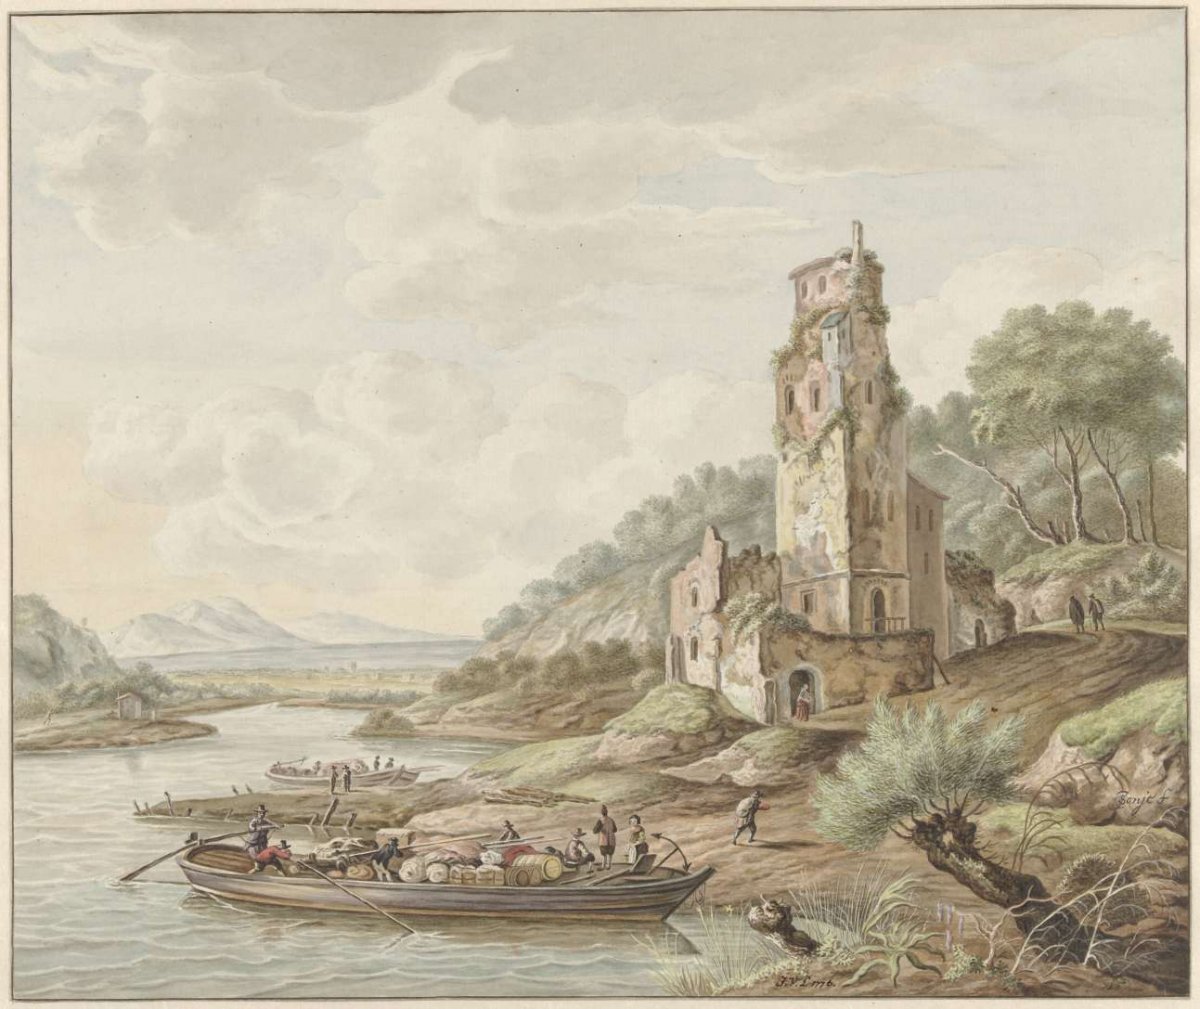 Landscape with barge with merchandise near a castle, Jan van Lockhorst, 1776